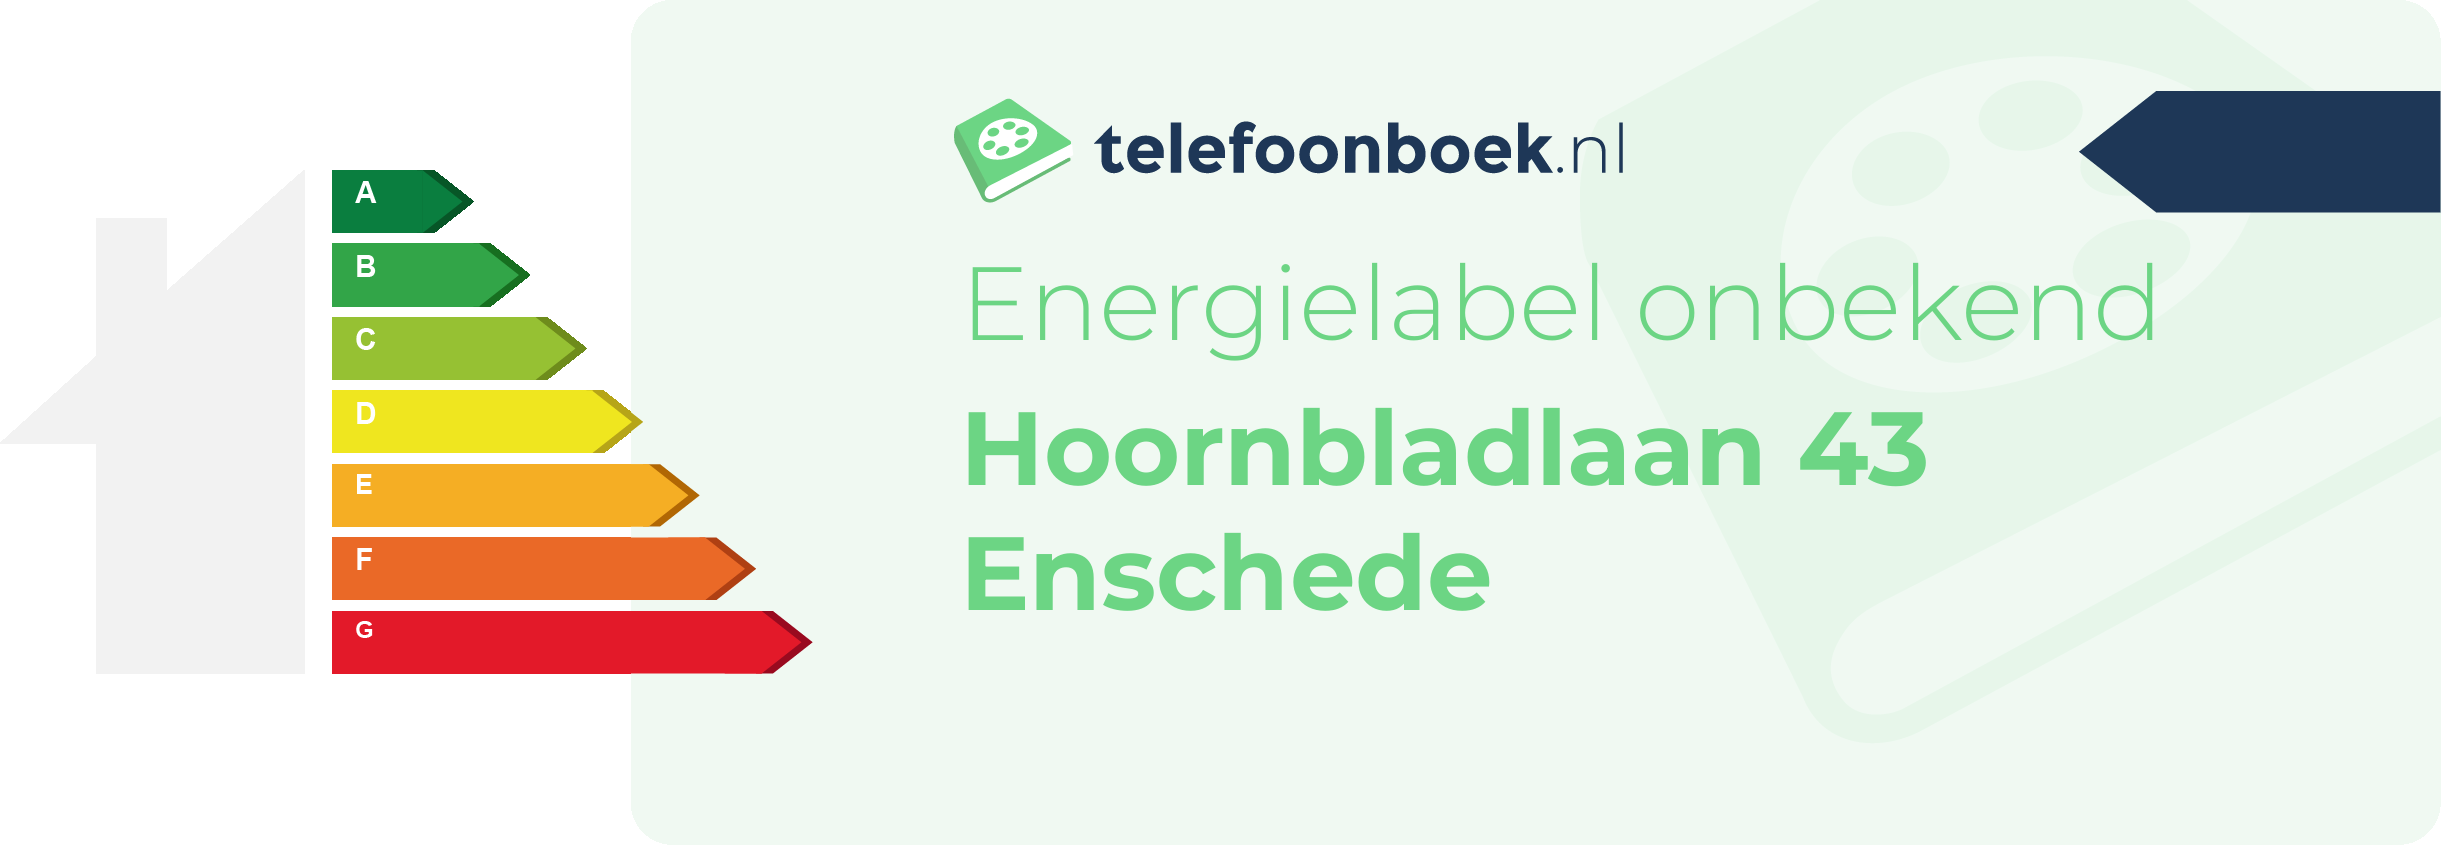 Energielabel Hoornbladlaan 43 Enschede